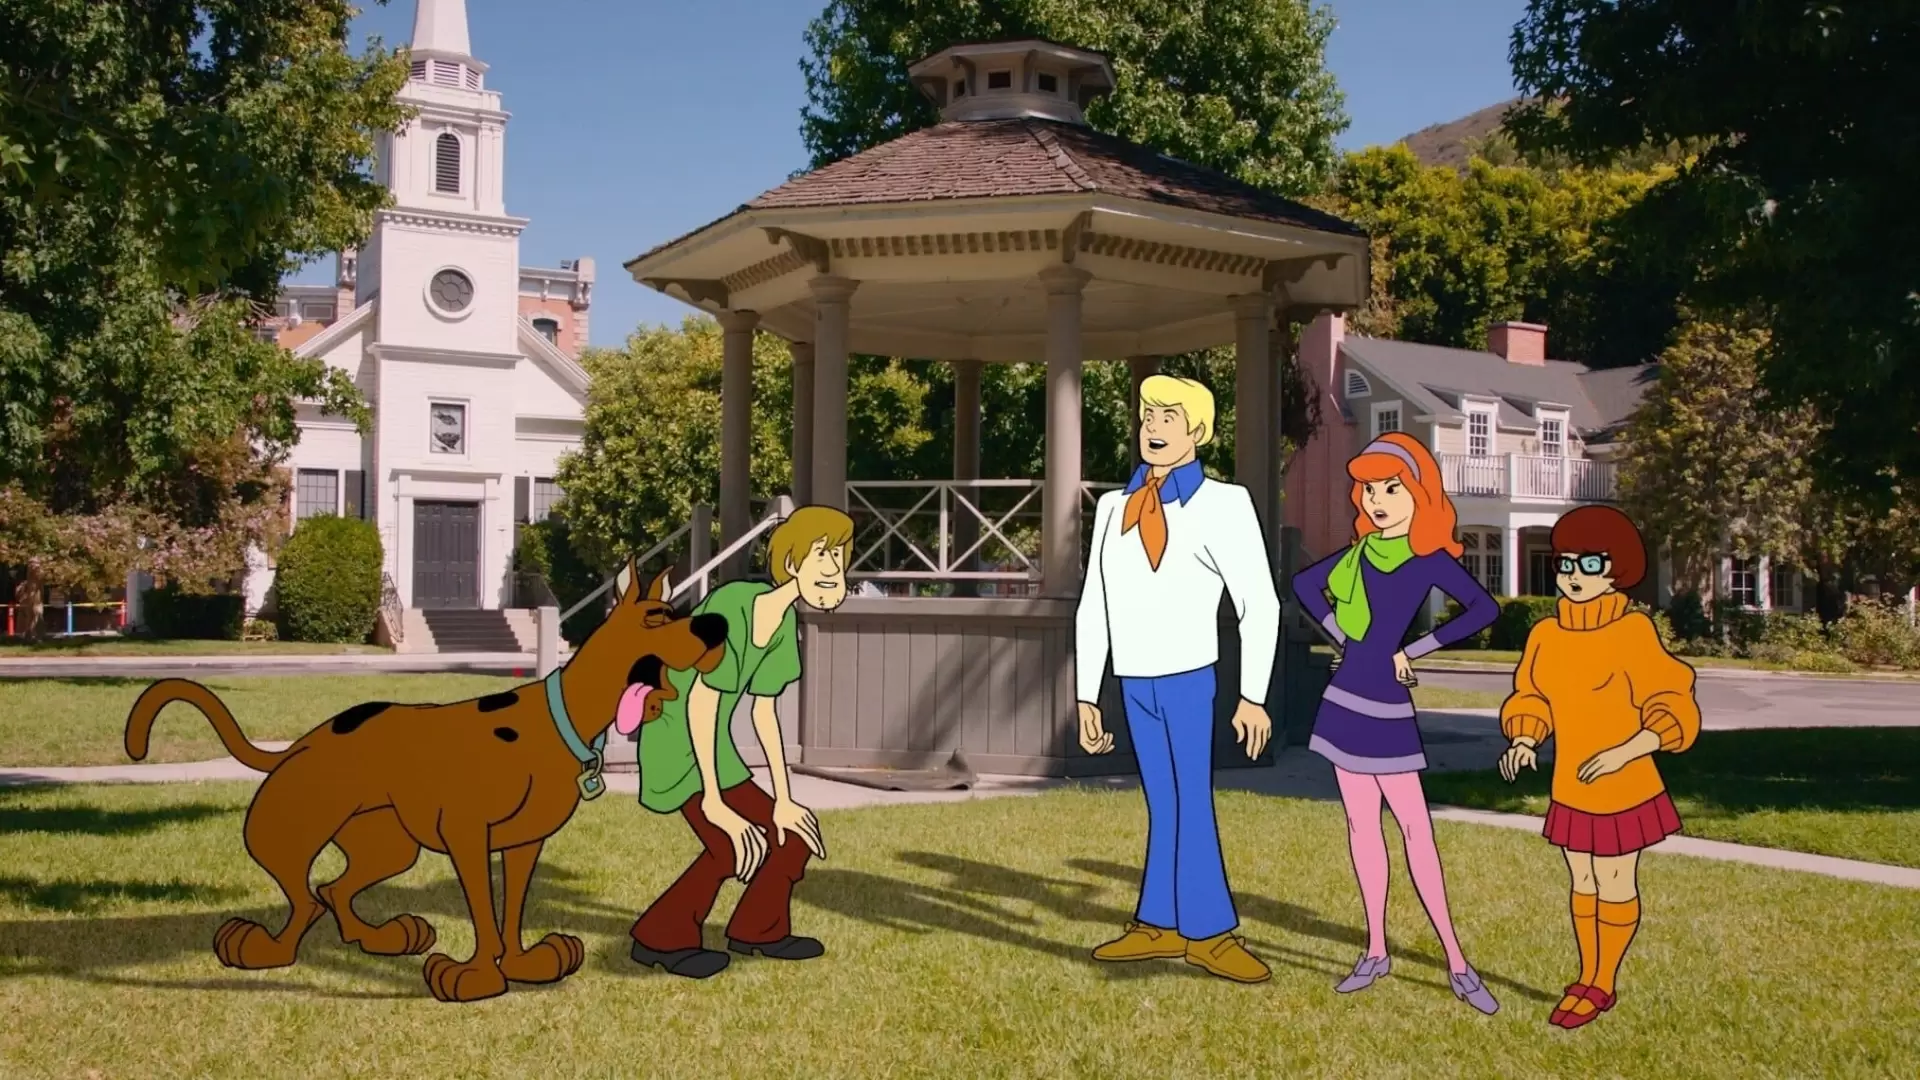 دانلود انیمیشن Scooby-Doo, Where Are You Now! 2021